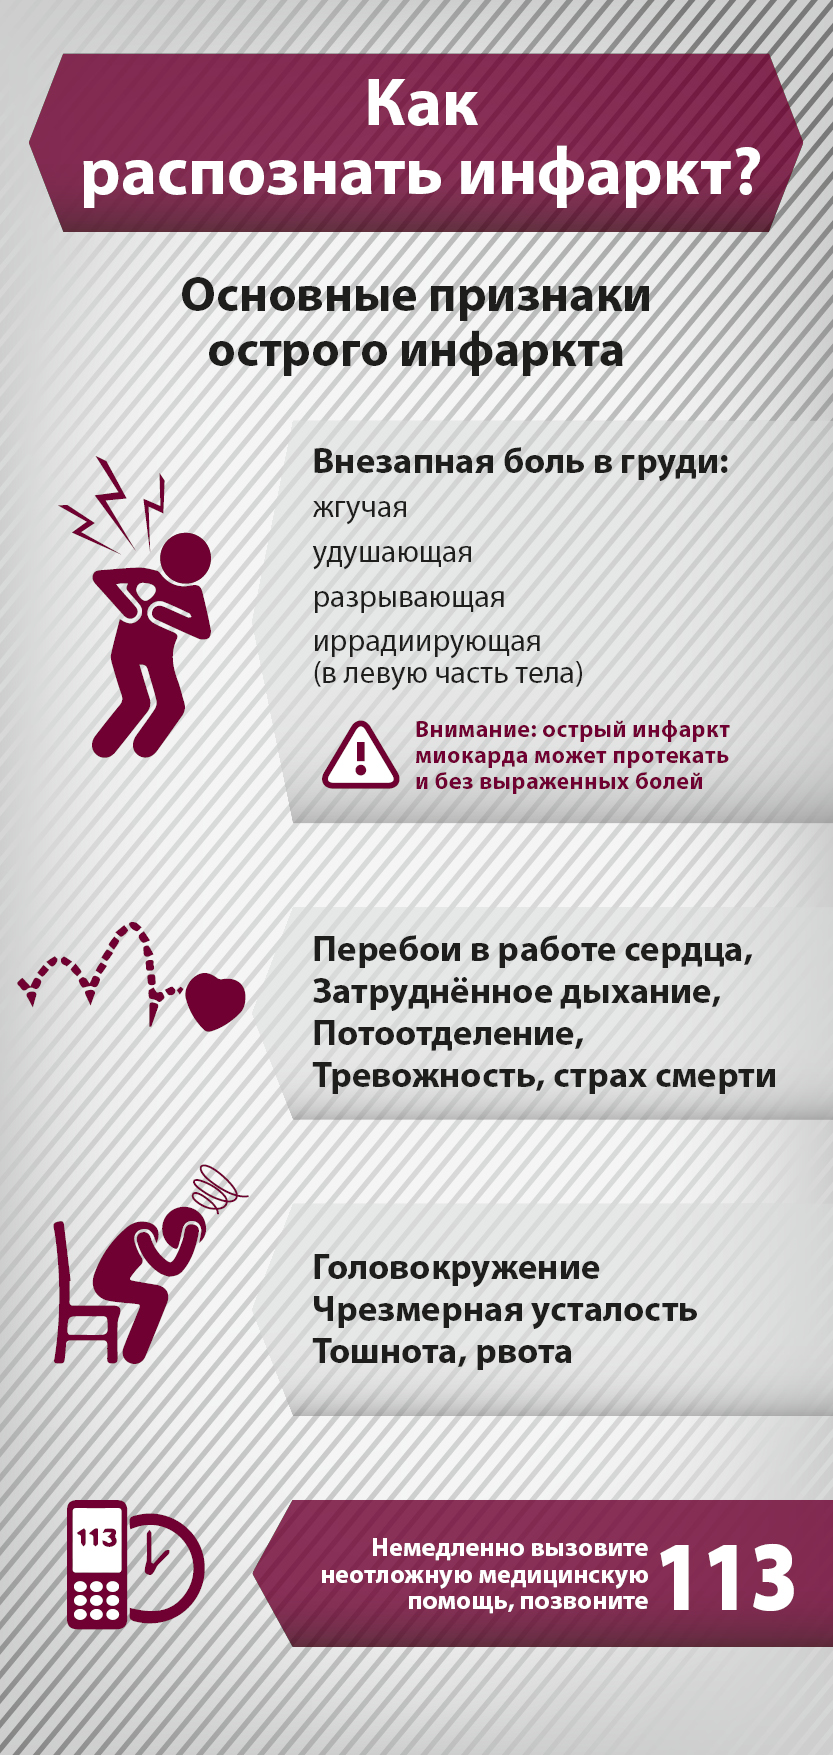 rudens-2015-infarkts-ru